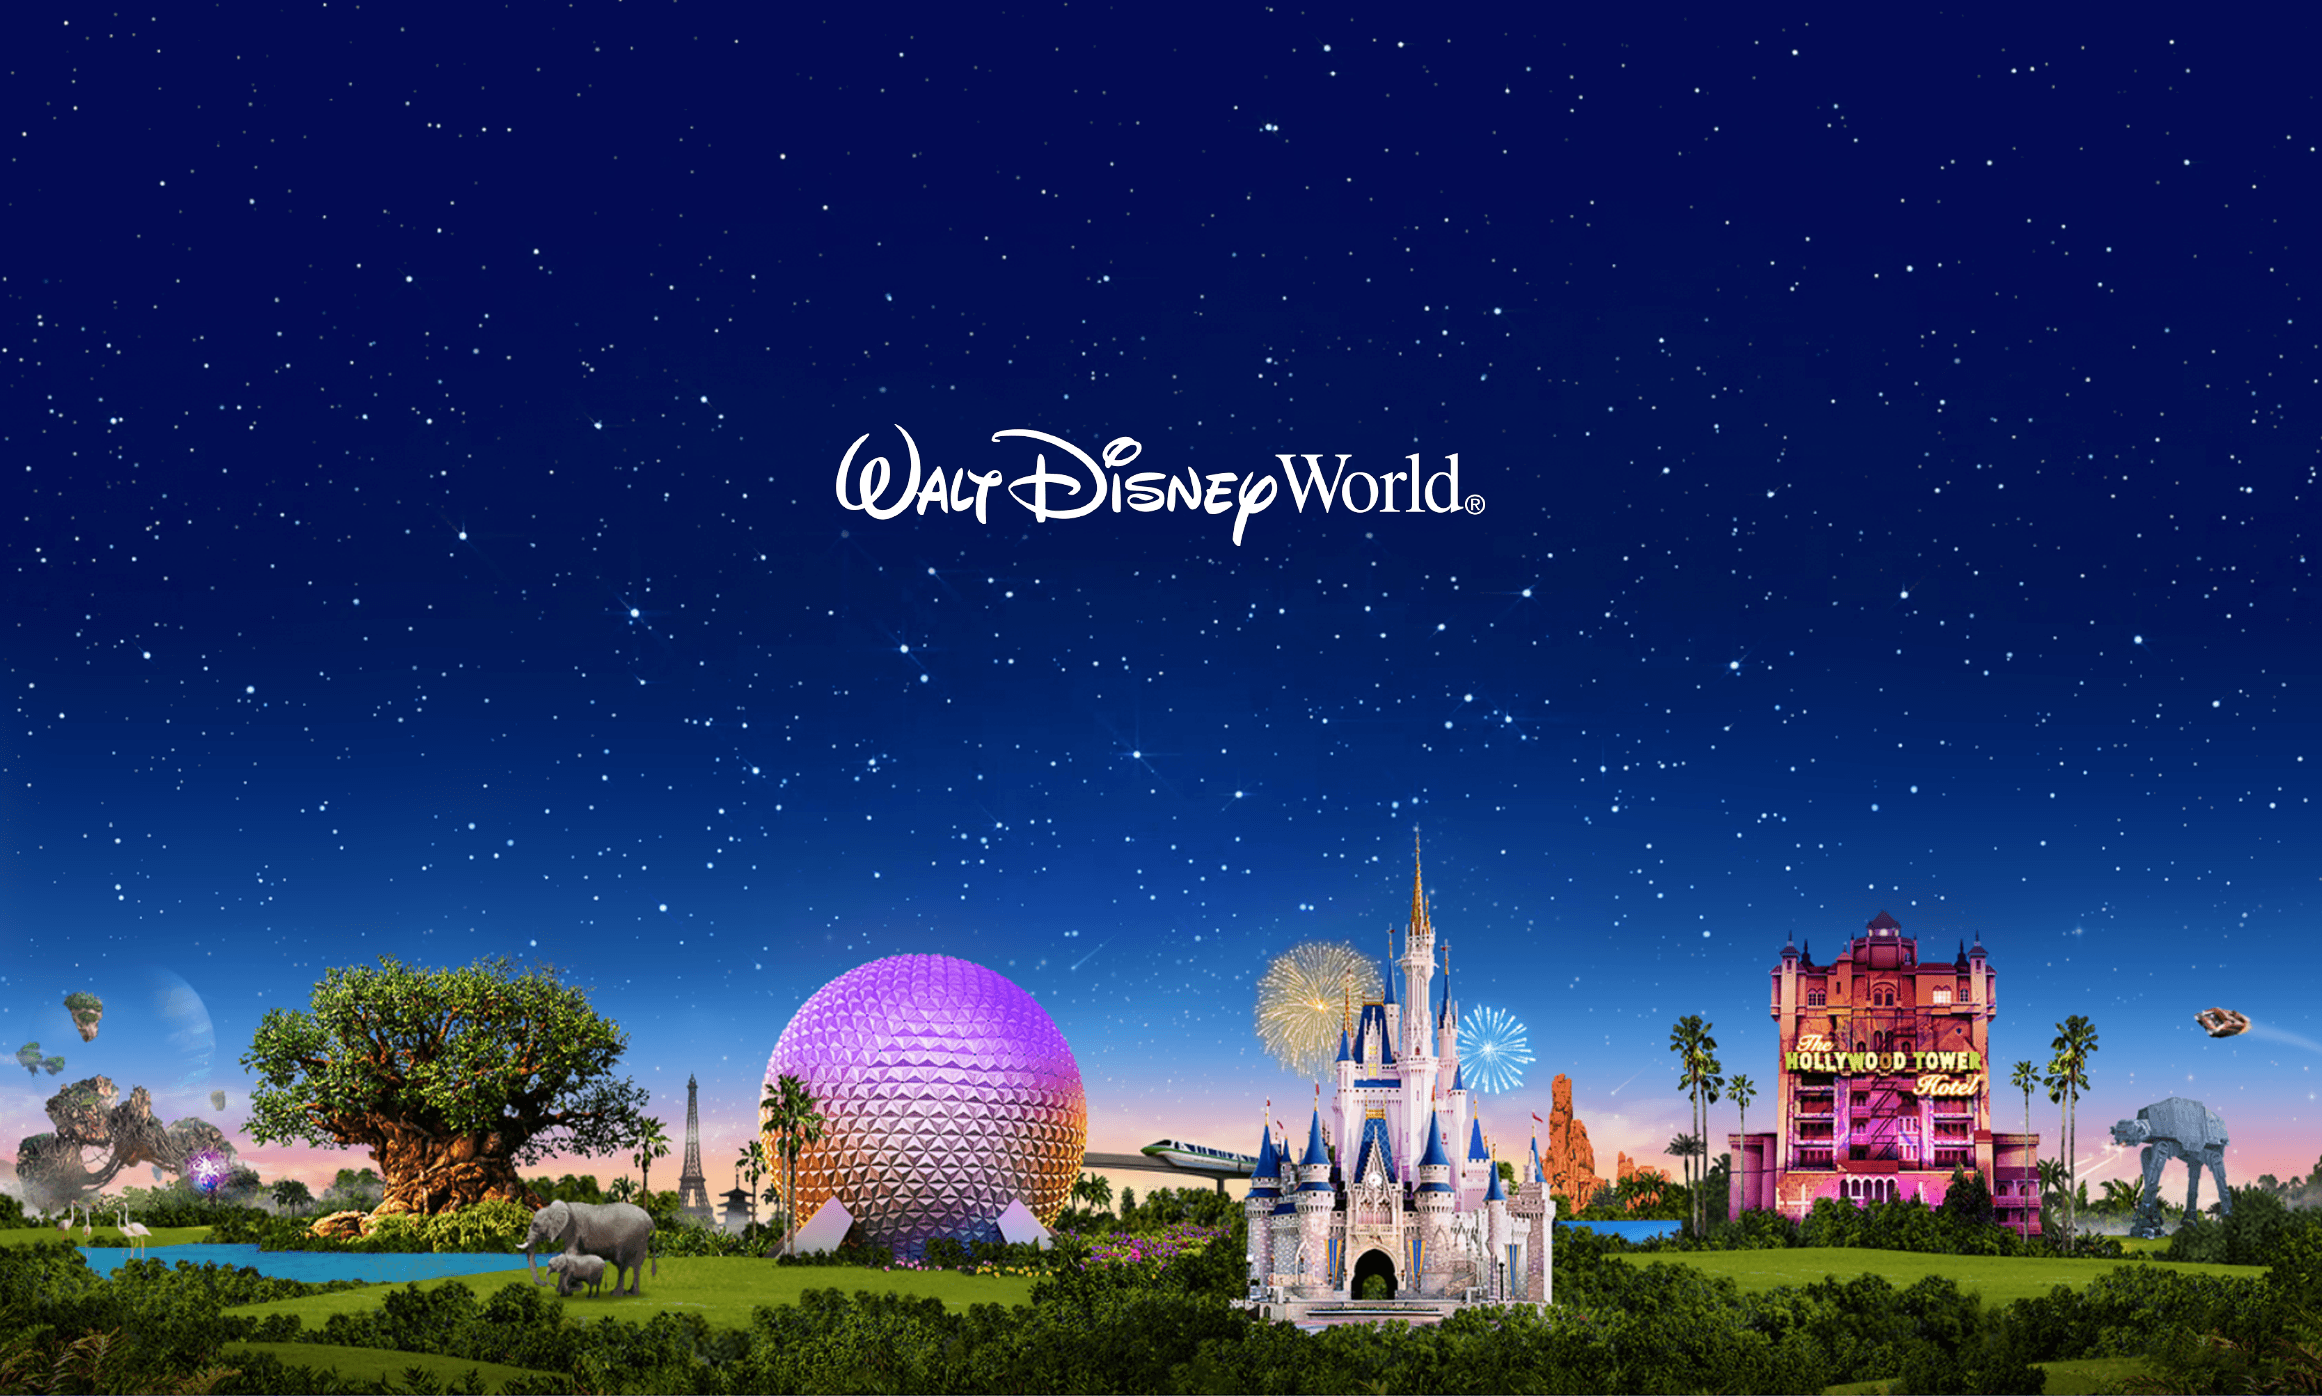 Upcoming Trip? Here is a Walt Disney World Desktop Wallpaper I